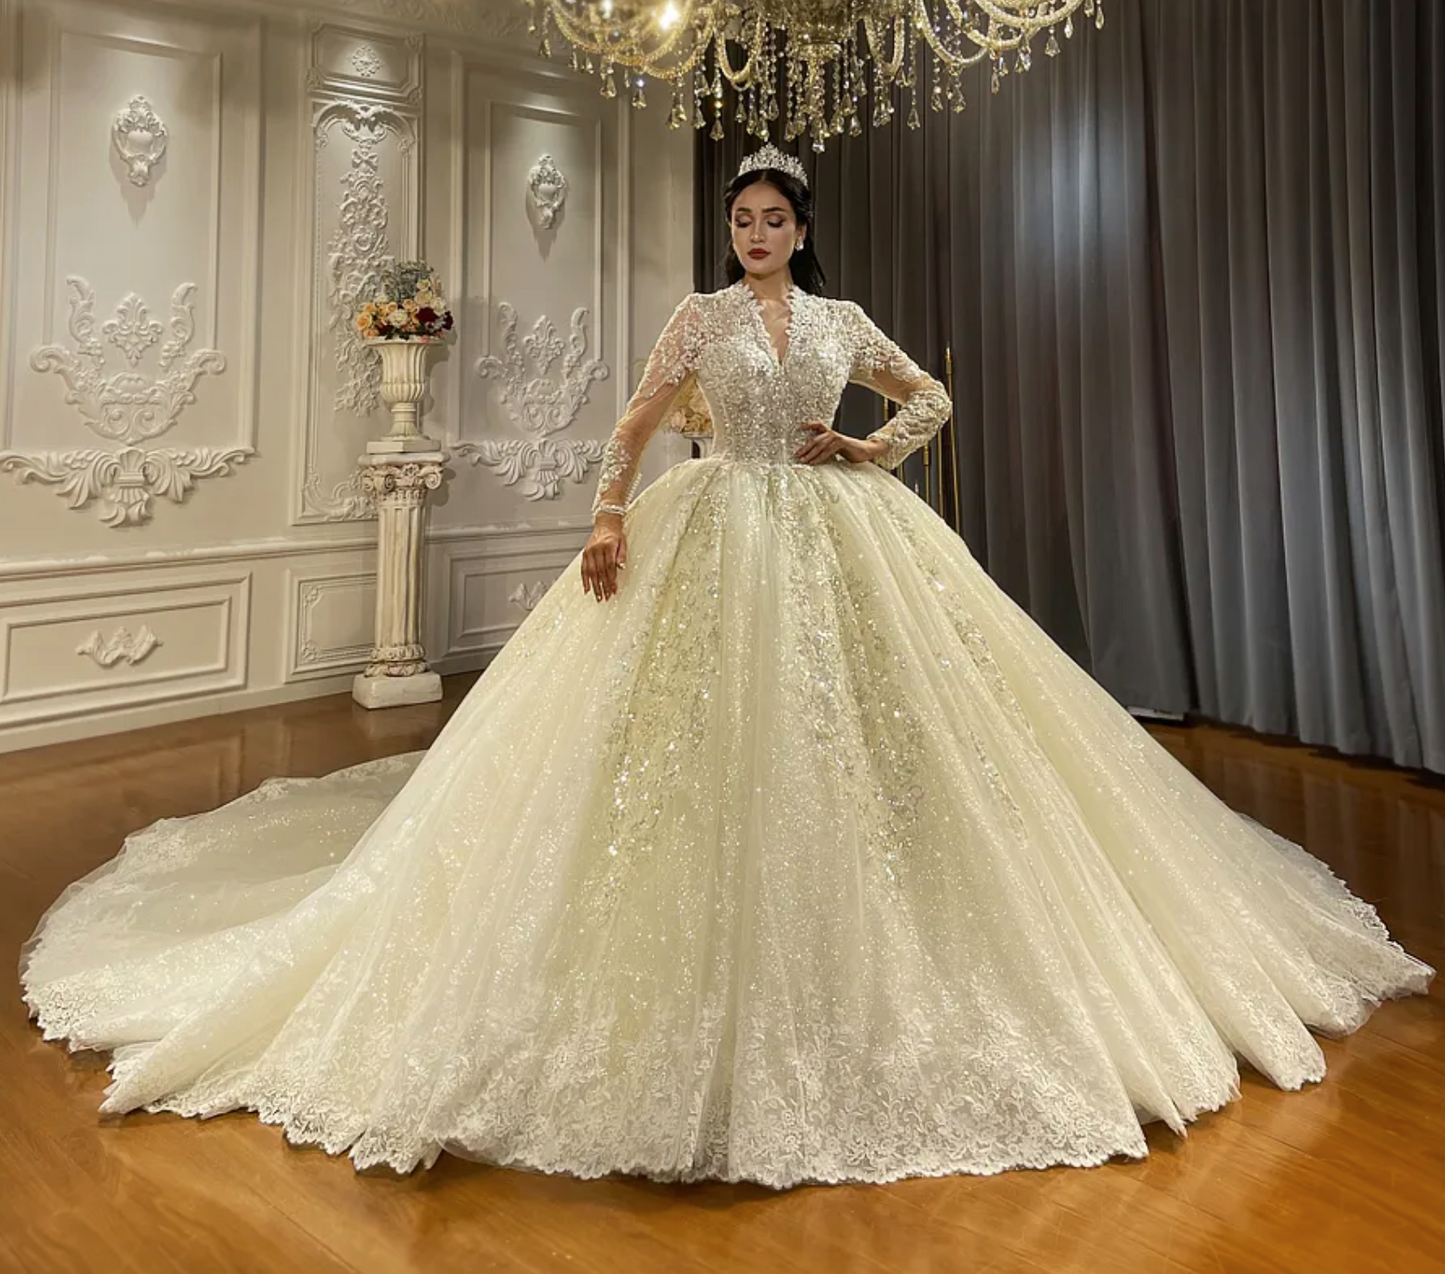 Glamorous Satin Ballgown with Elegant Accessories” Designed for zaria davis  | by DigitalCoutureCo | Bridal Collection | Medium